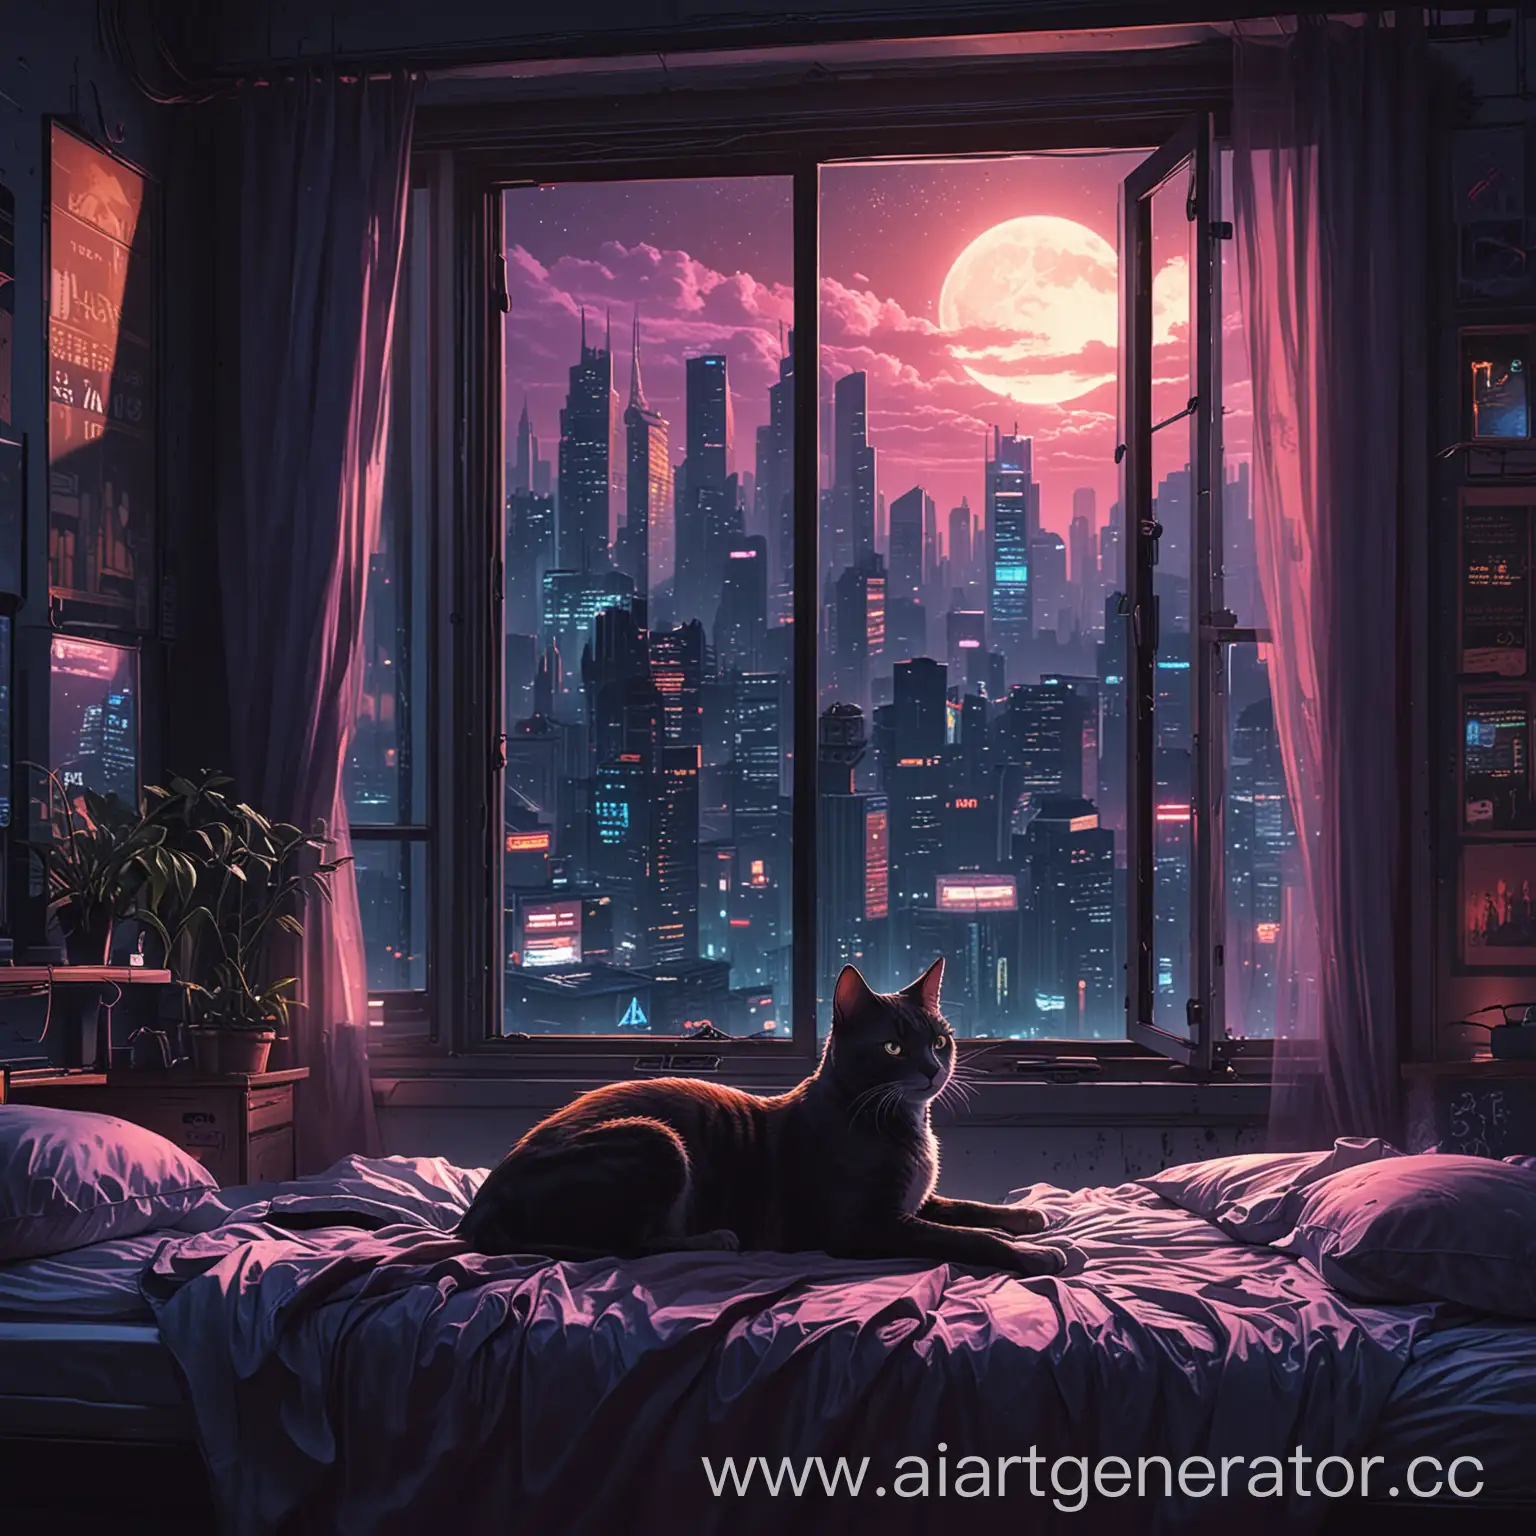 Night, The city, Window, Bed, Illustration, cyberpunk, HD wallpaper, The cat is sitting on the window